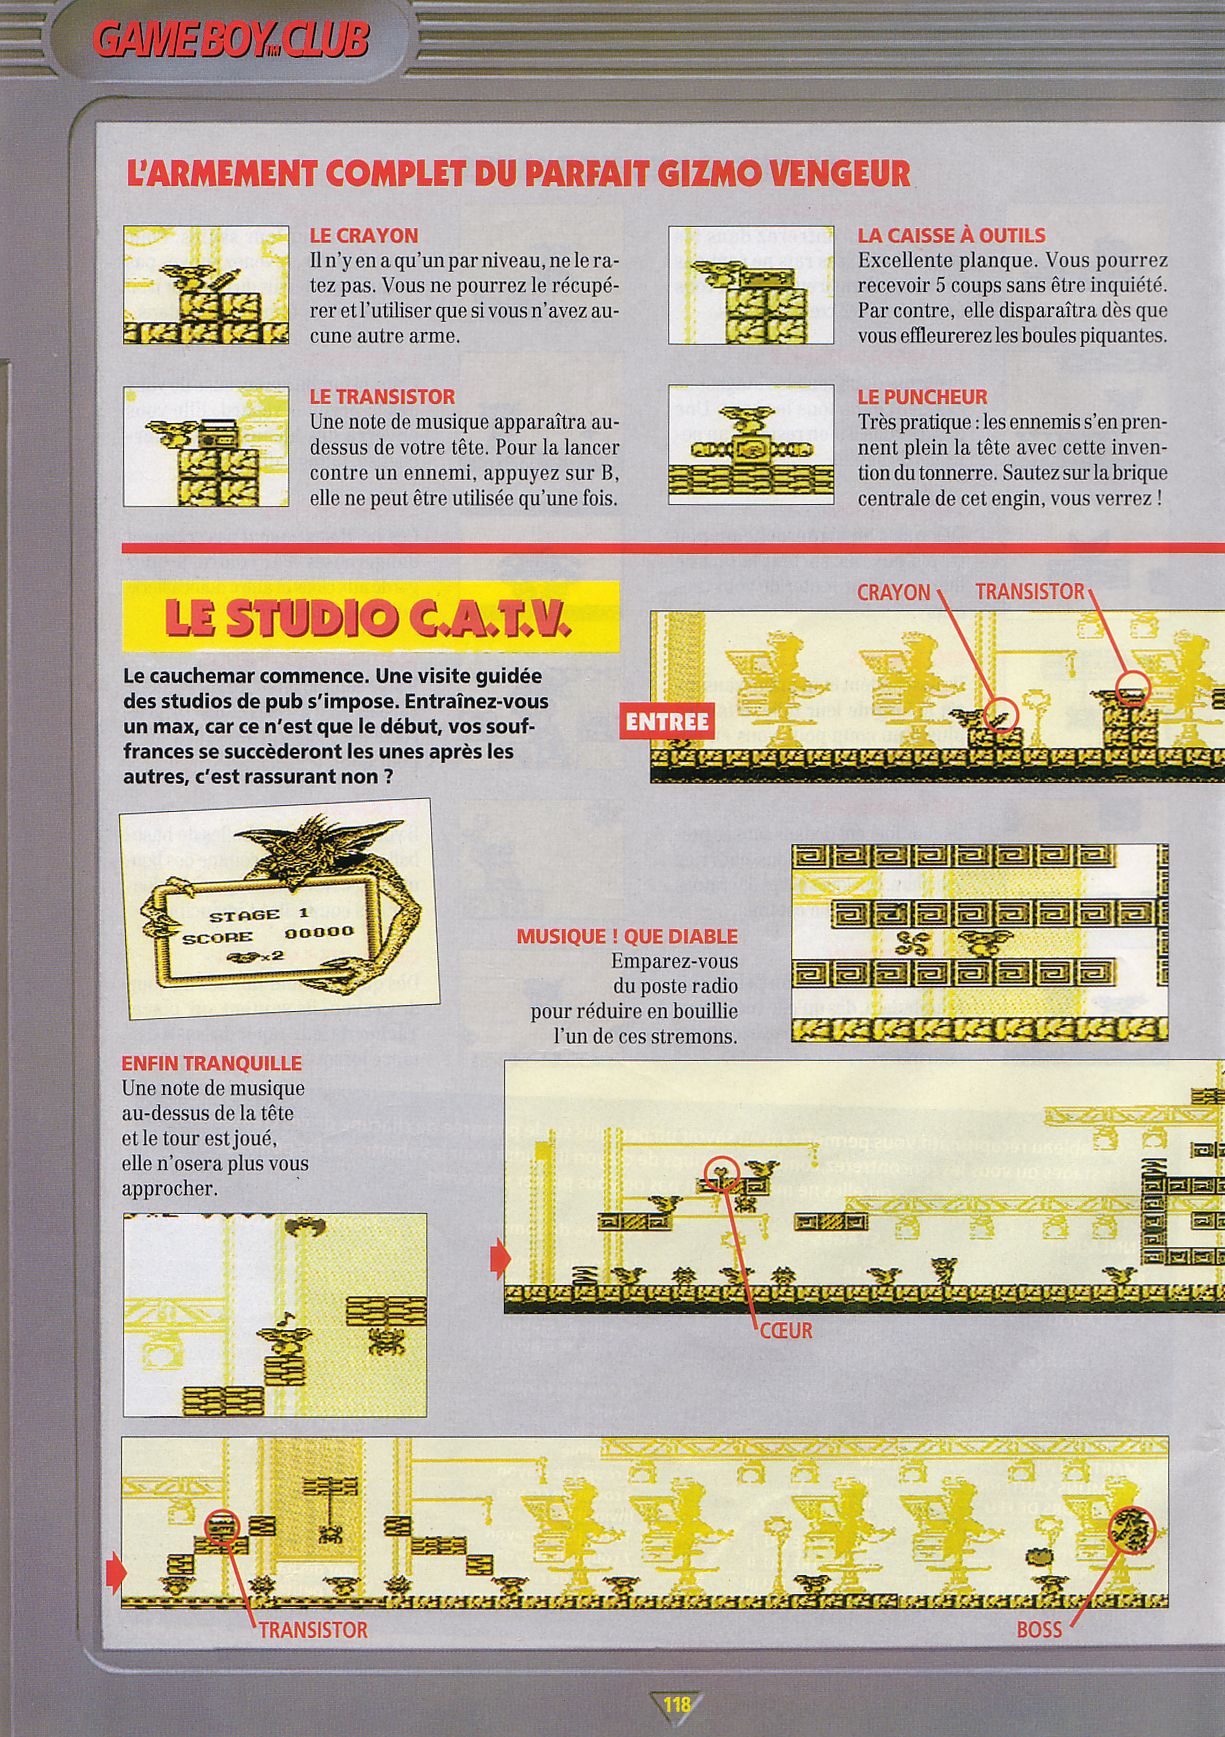 tests//813/Nintendo Player 007 - Page 118 (1992-11-12).jpg